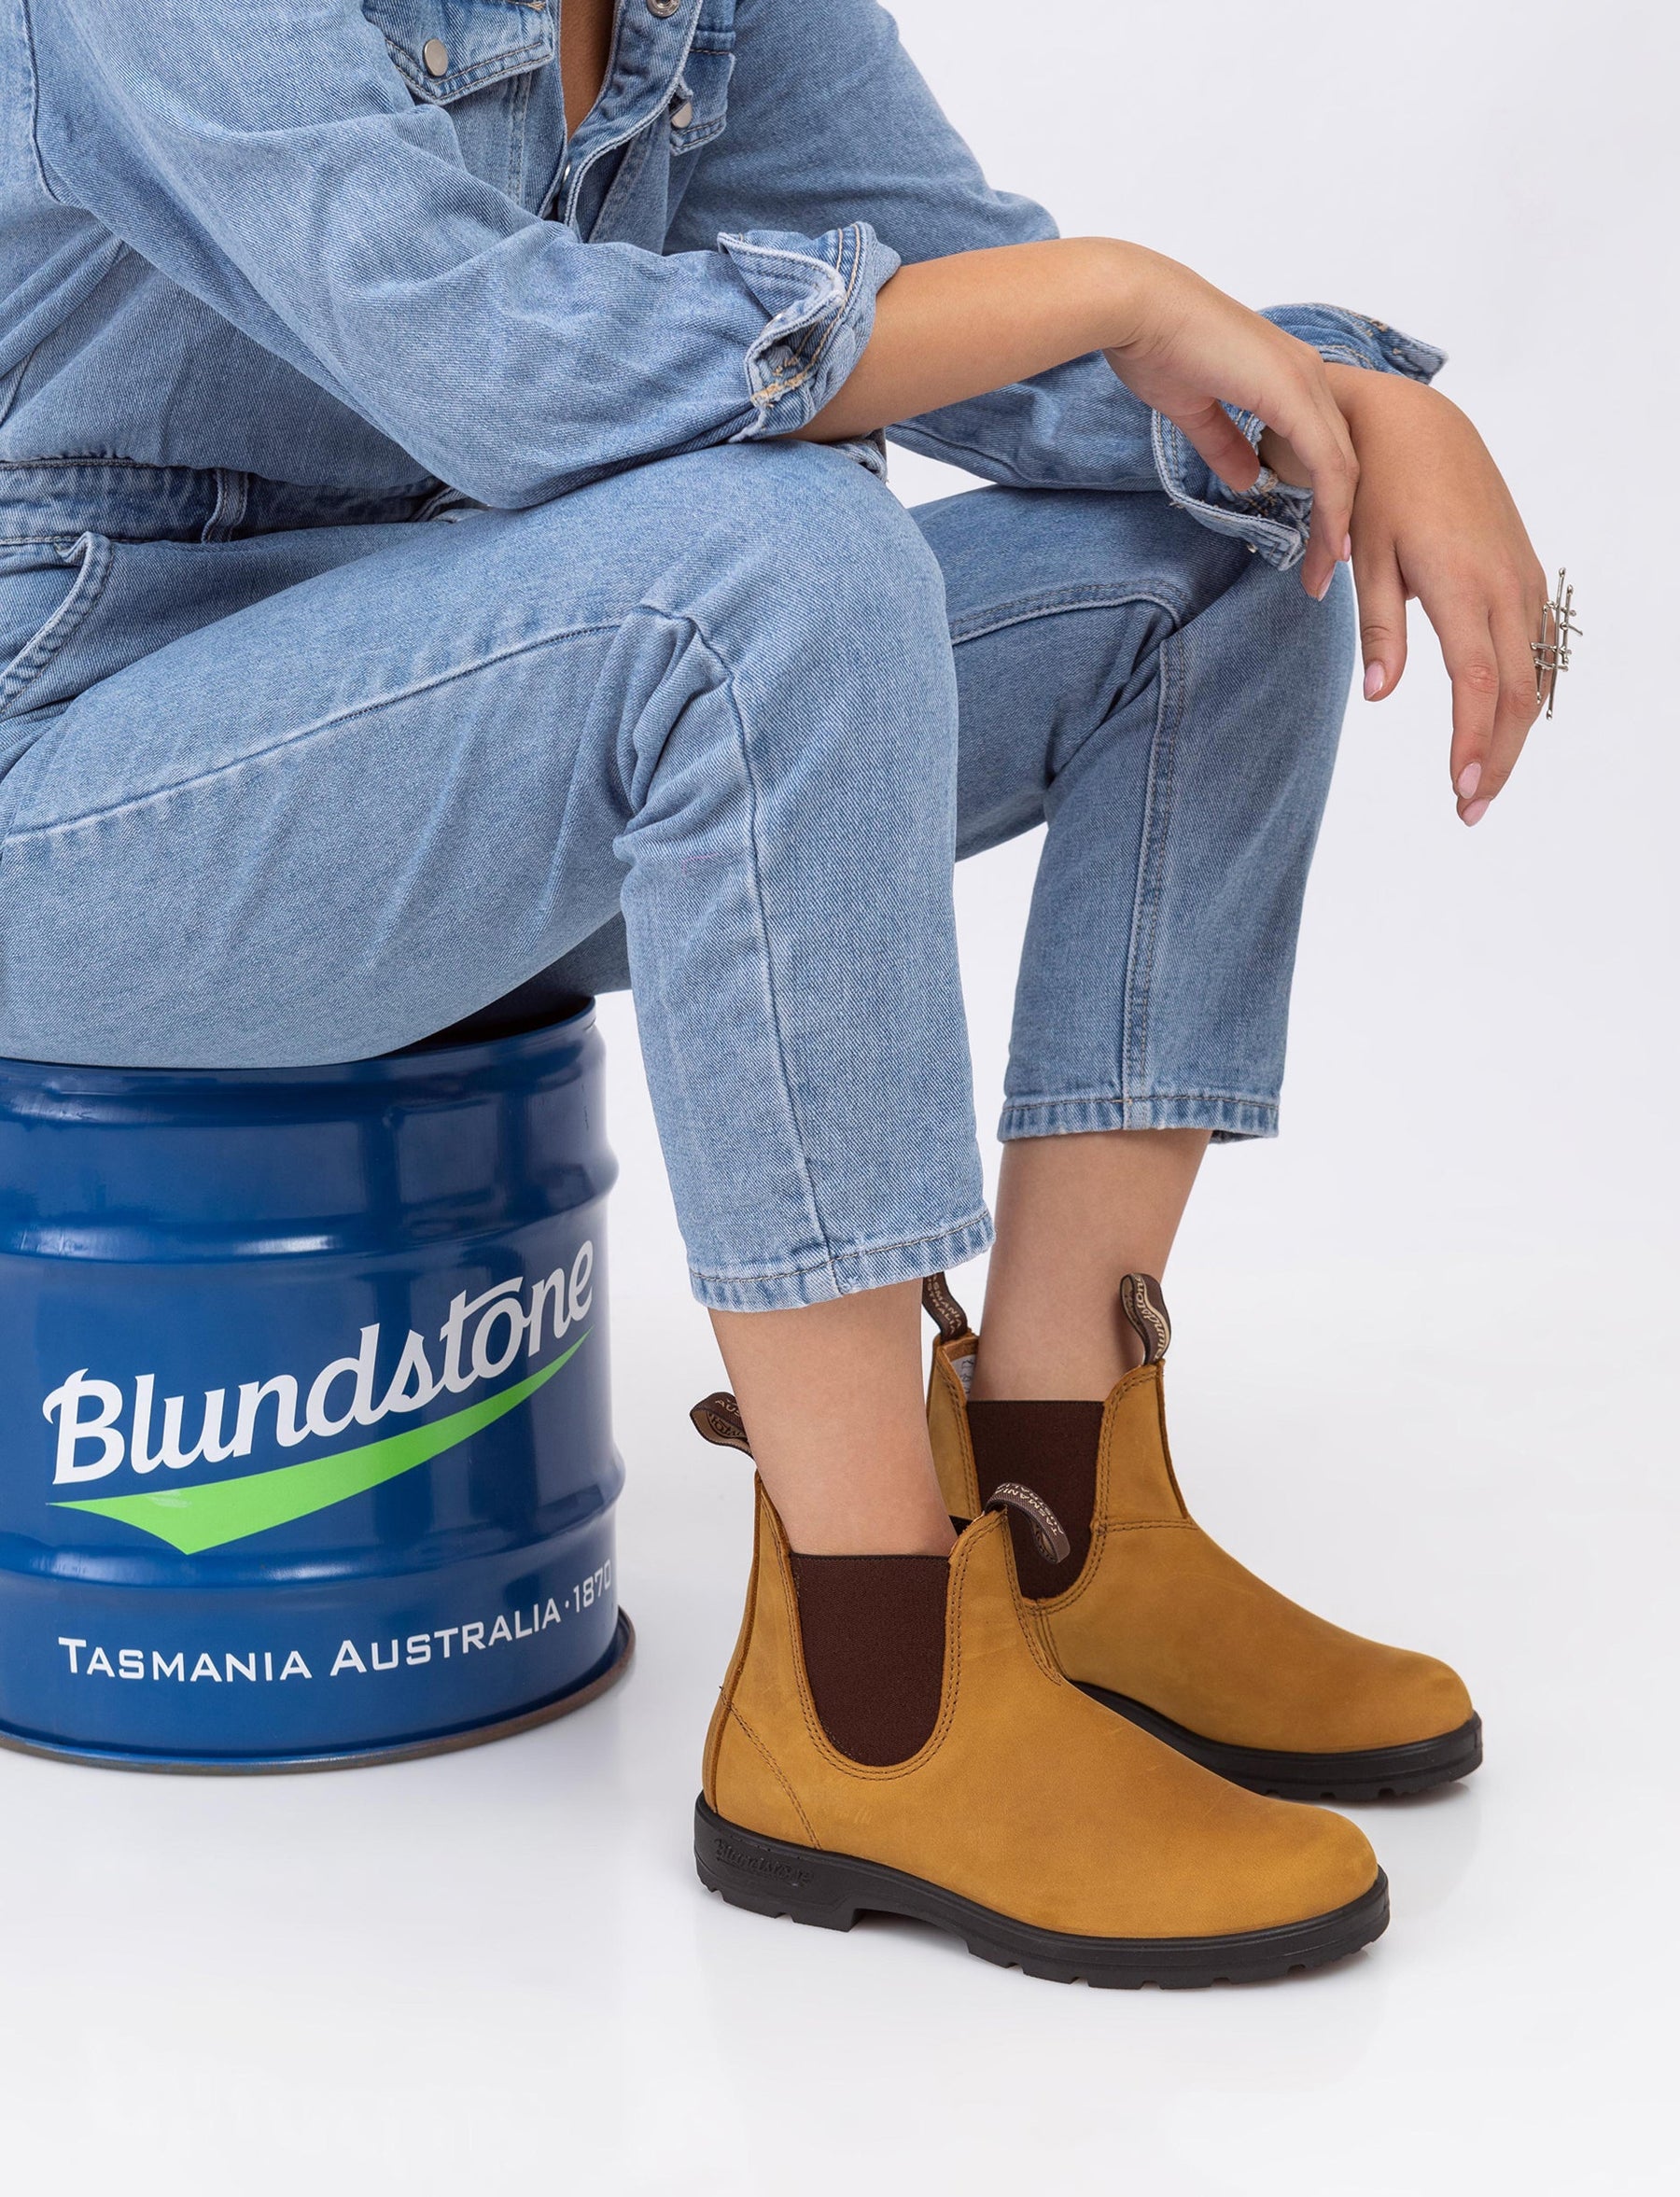 Blundstone 561 - נעלי בלנסטון 561 נשים-Blundstone-36-נאקו